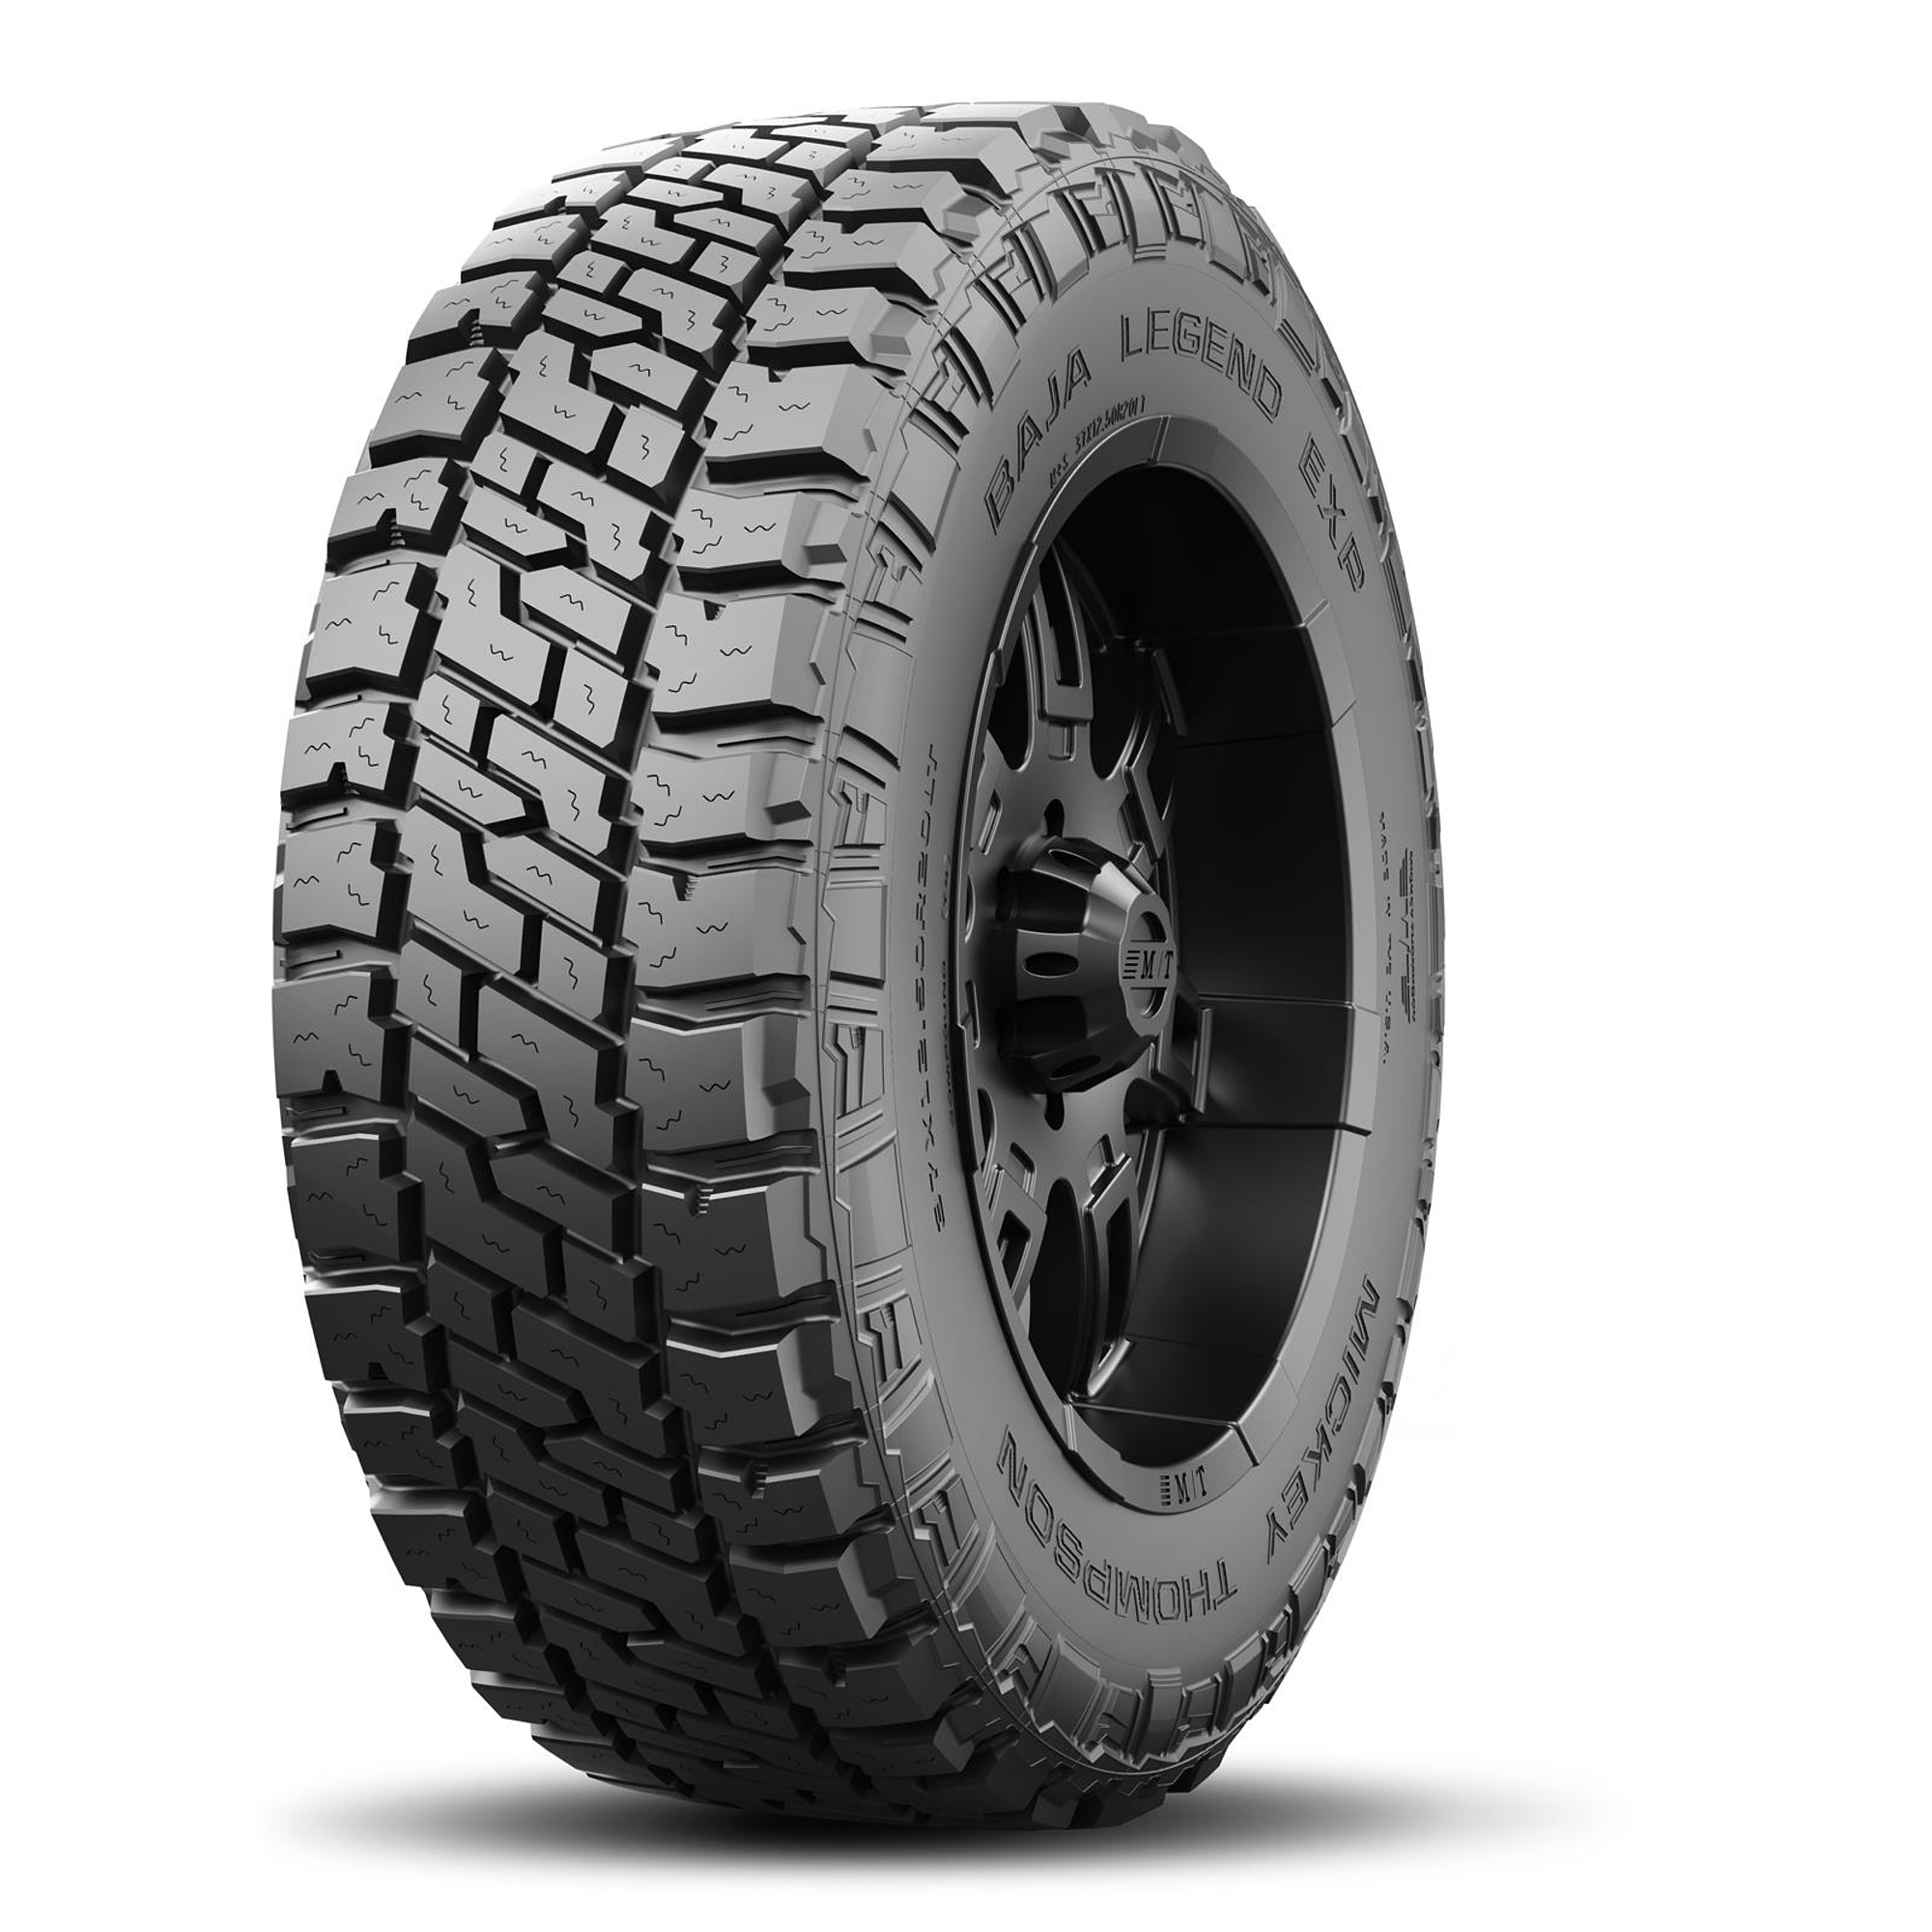 Baja Legend EXP Tire LT285/65R18 125/122Q - 247543